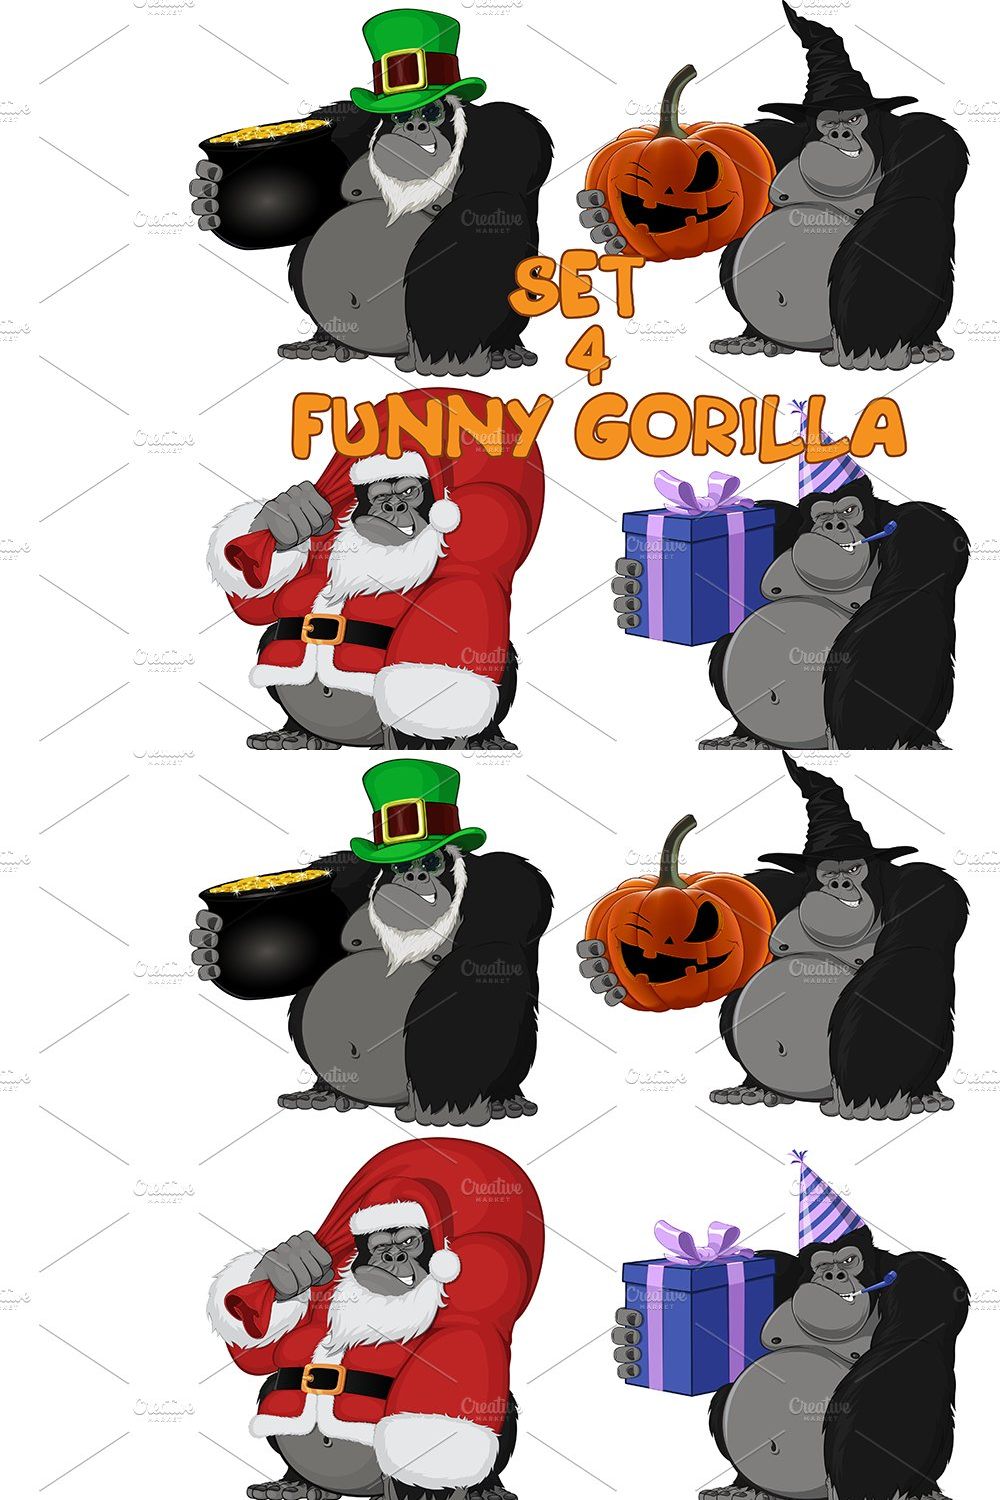 Set 4 funny gorilla pinterest preview image.